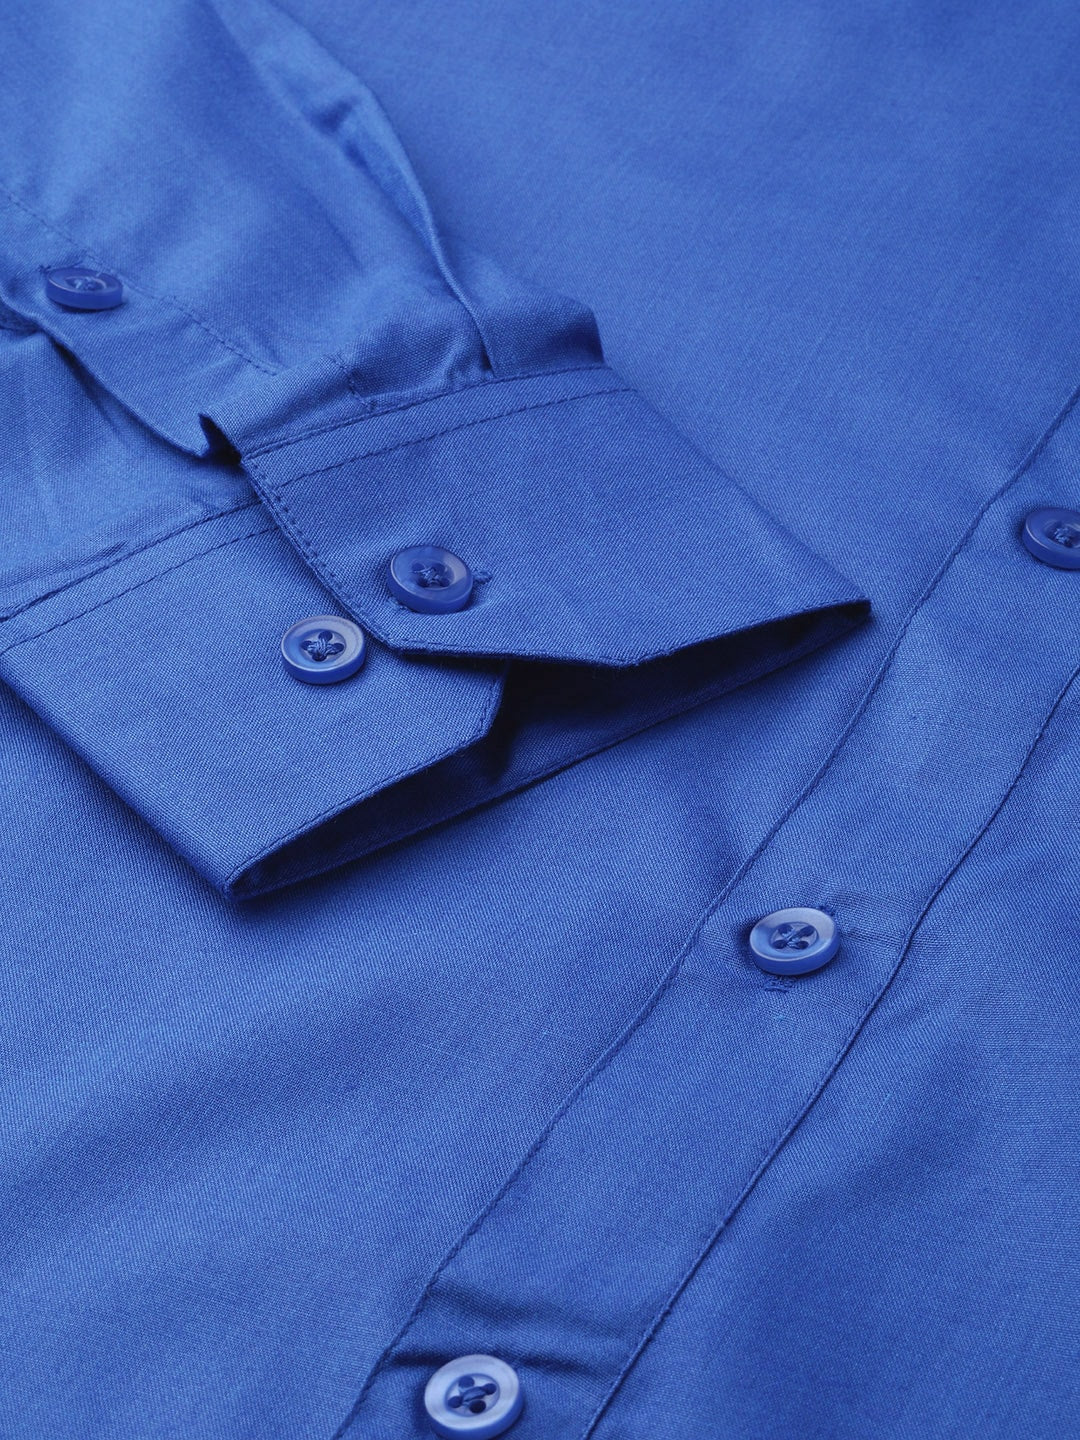 Jainish Men's Cotton Solid Royal Blue Formal Shirt's ( SF 361Royal )